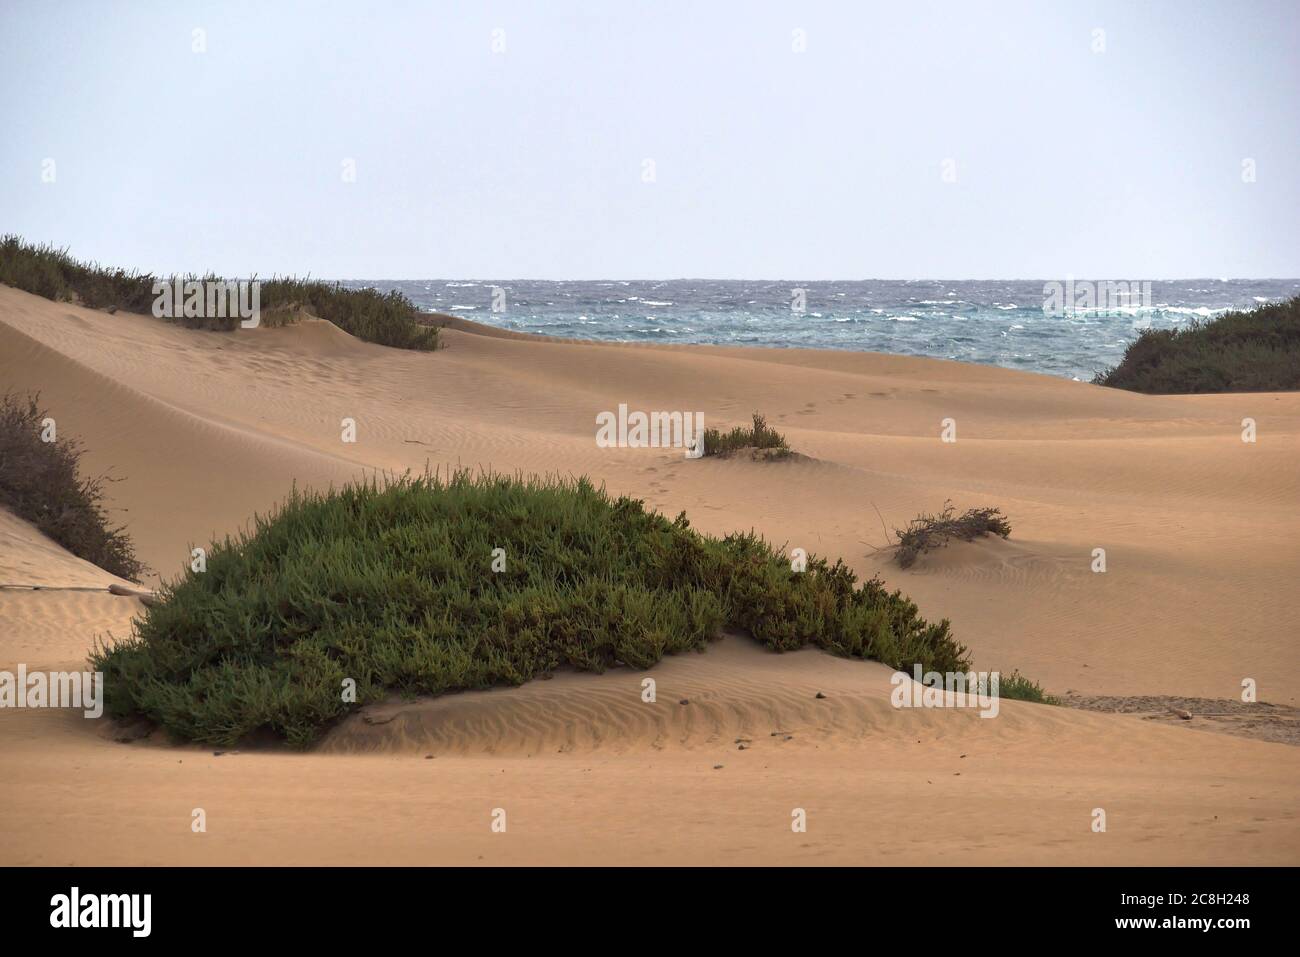 Dunas de Maspalomas - Gran Canaria - Spain - at storm - small dune with plants - footprints in the sand - gray sea Stock Photo